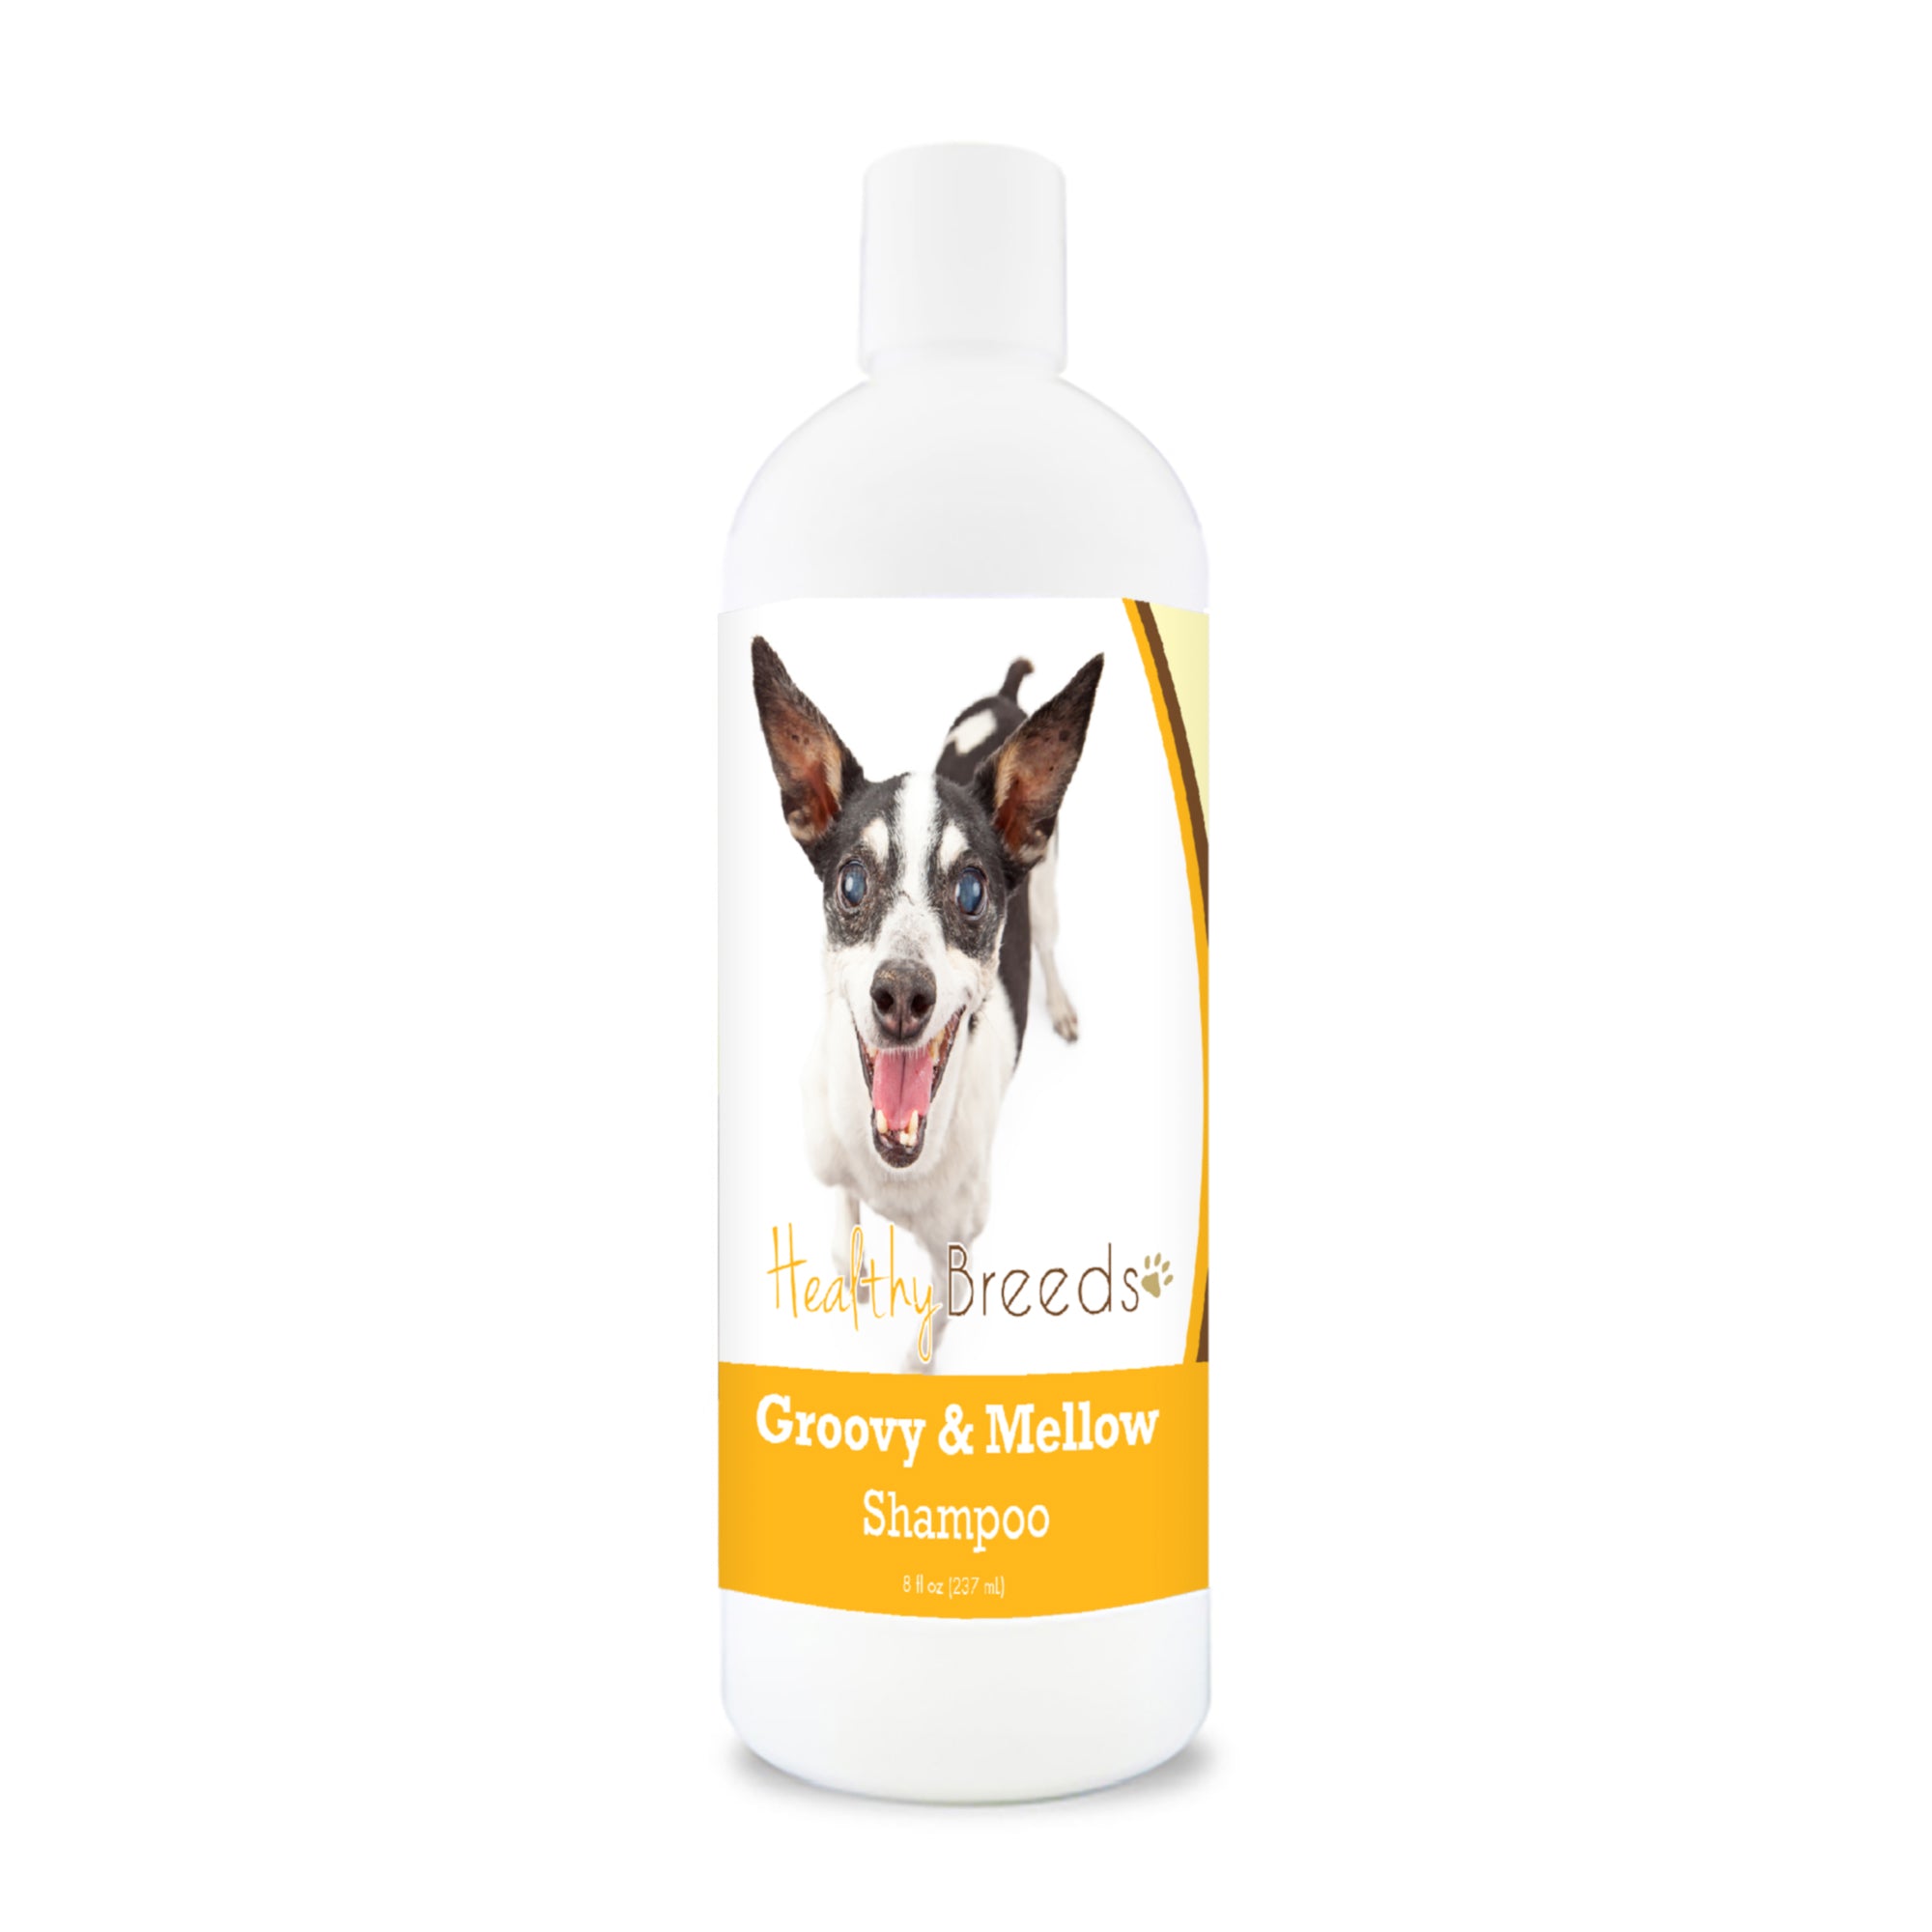 Rat Terrier Groovy & Mellow Shampoo 8 oz